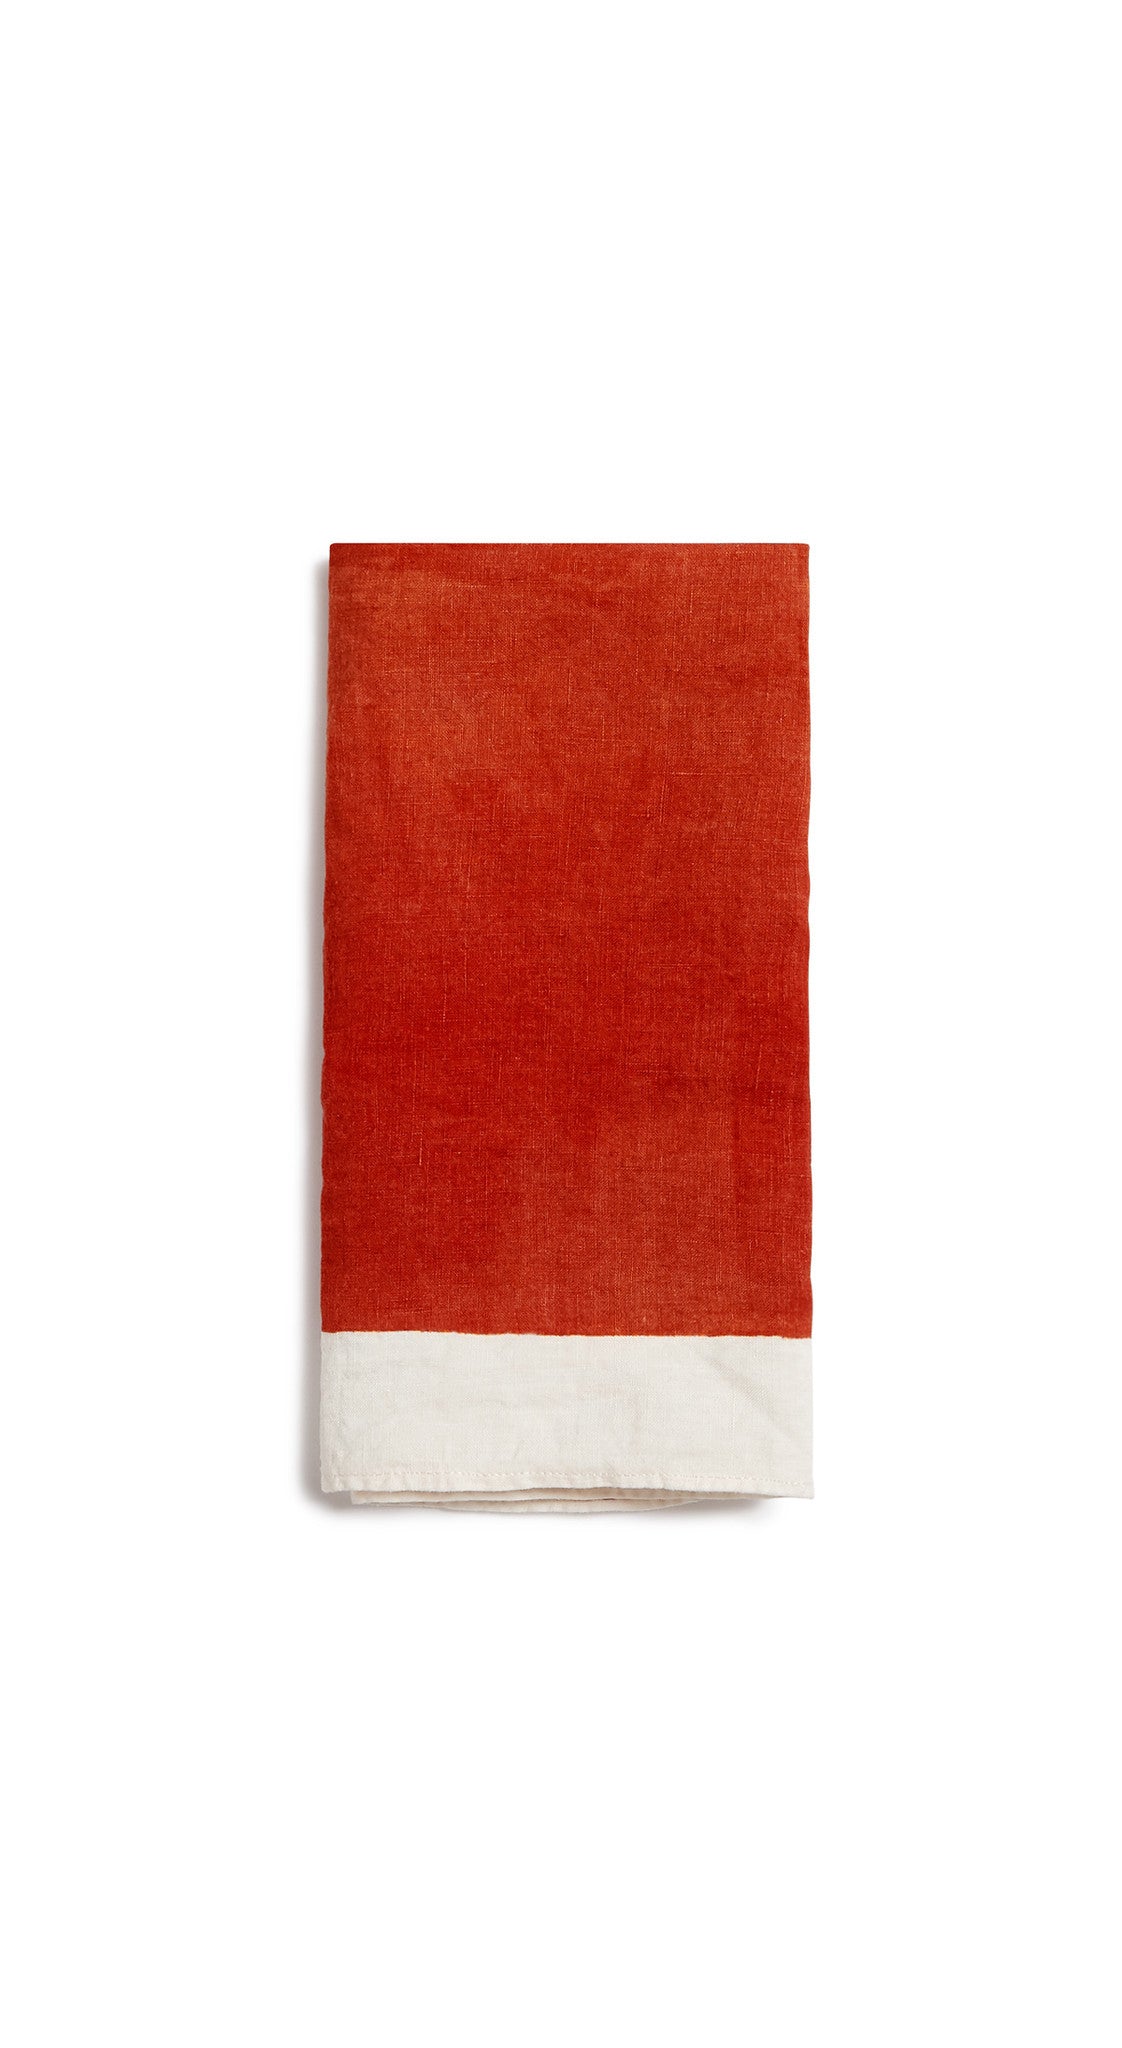 Full Field Linen Napkin in Rust Red, 50x50cm